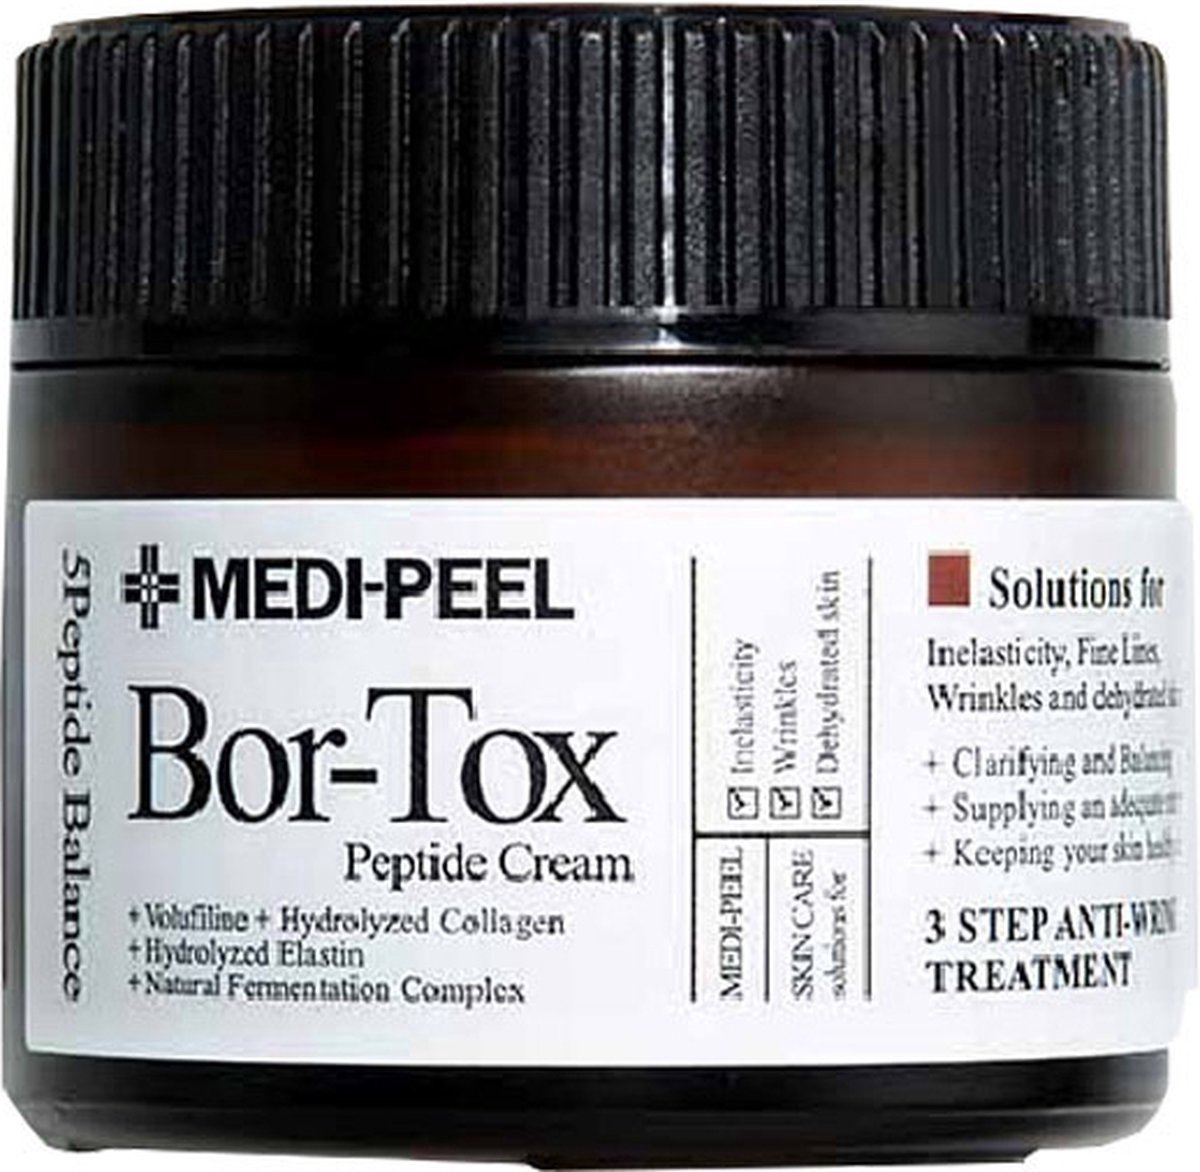 Medi-peel - Bor-tox Peptide Cream - 50ml